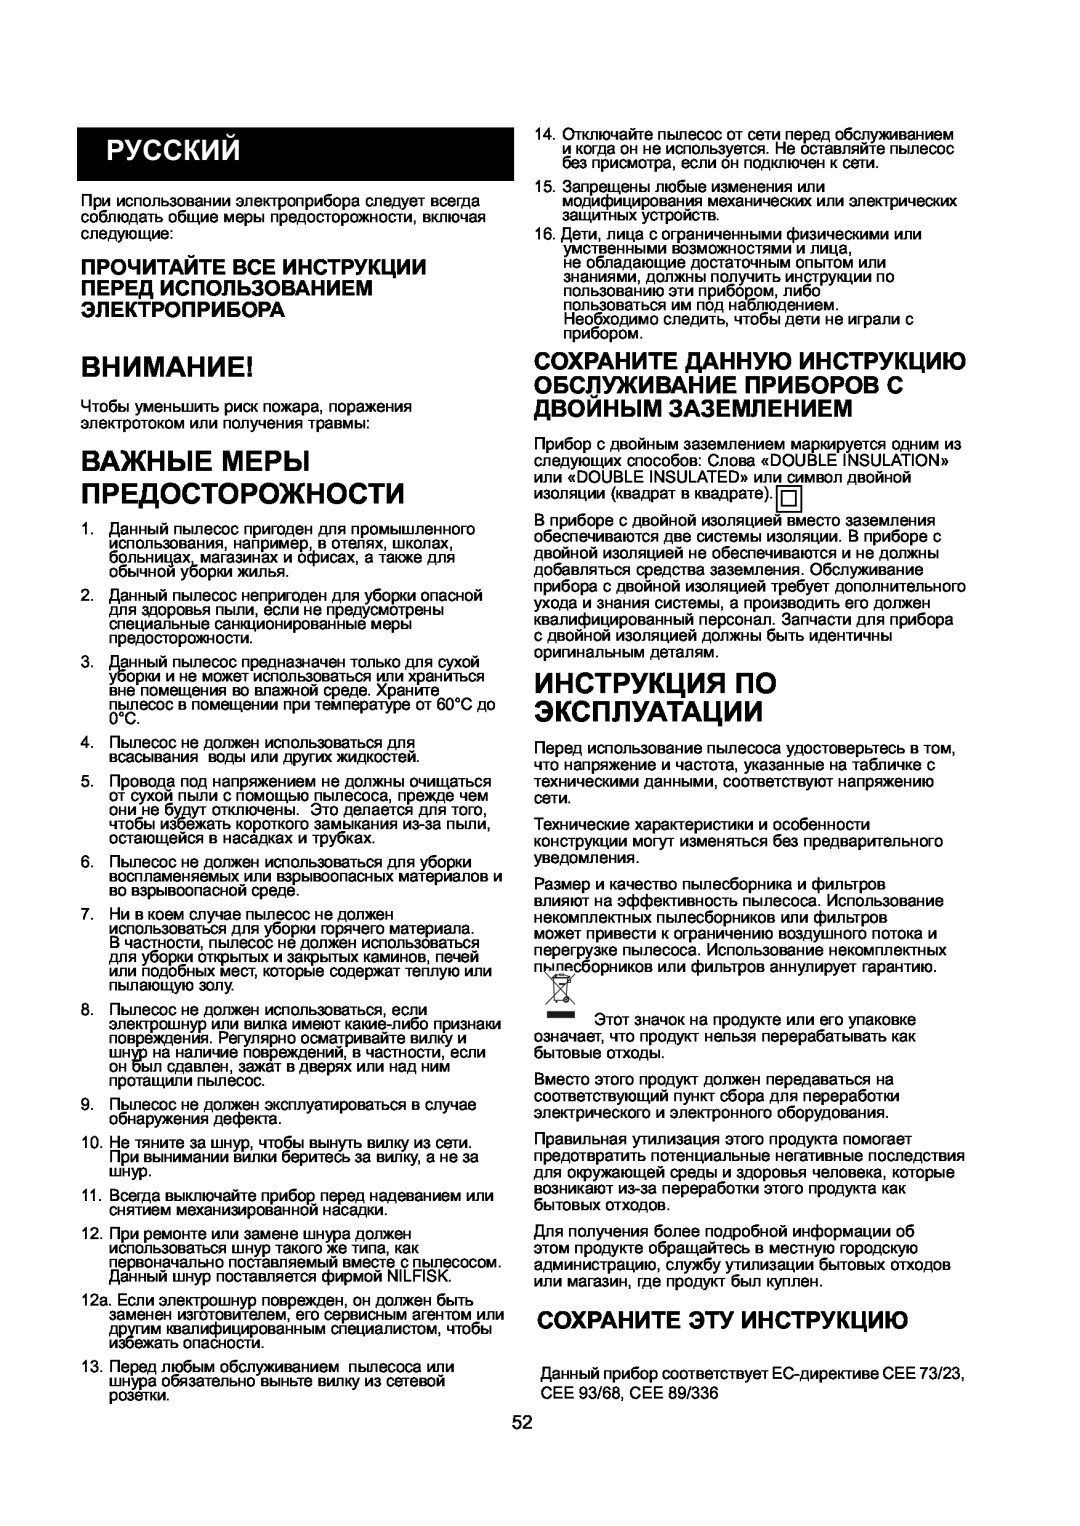 Nilfisk-ALTO GD 10 Back, GD 5 Back manual Русский, Внимание, Инструкция По Эксплуатации, Сохраните Эту Инструкцию 